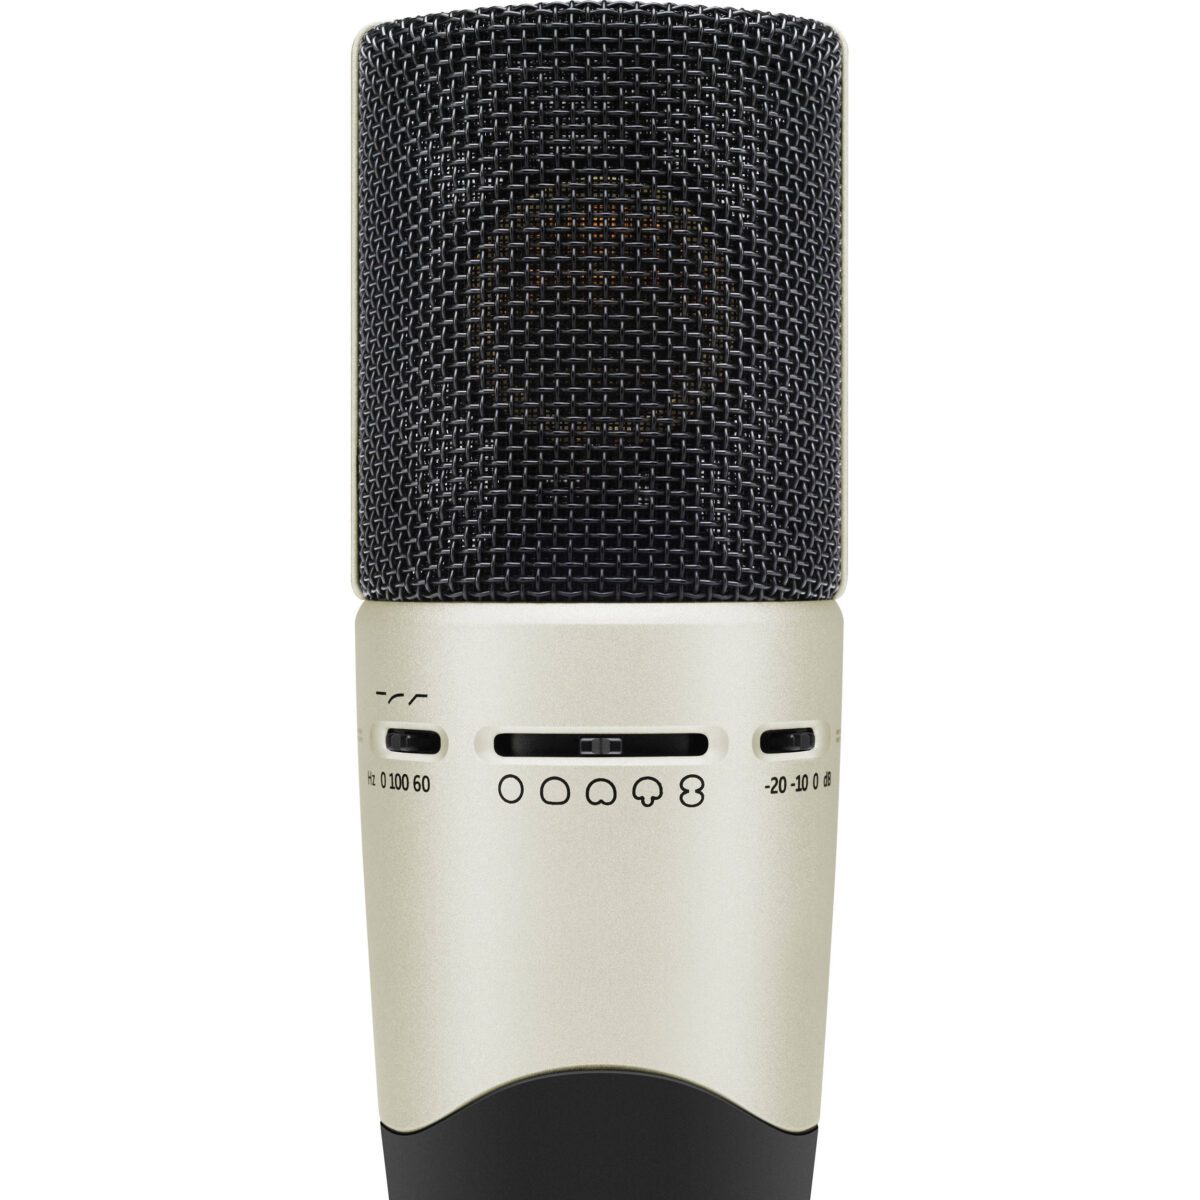 Sennheiser MK 8 Multiple-Pattern Large-Diaphragm Condenser Microphone